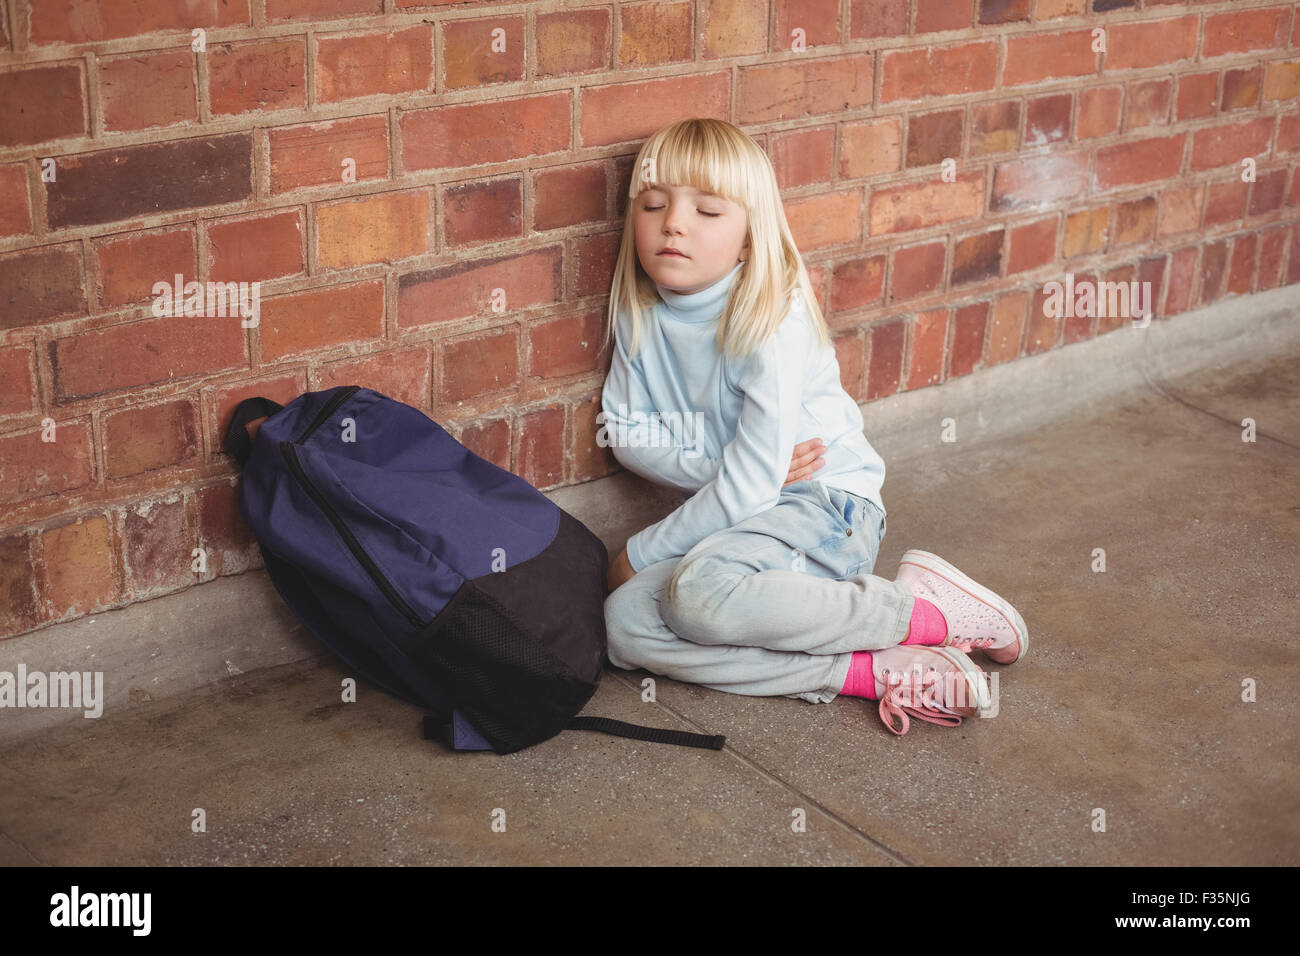 Sad pupil sitting alone on ground Stock Photo - Alamy